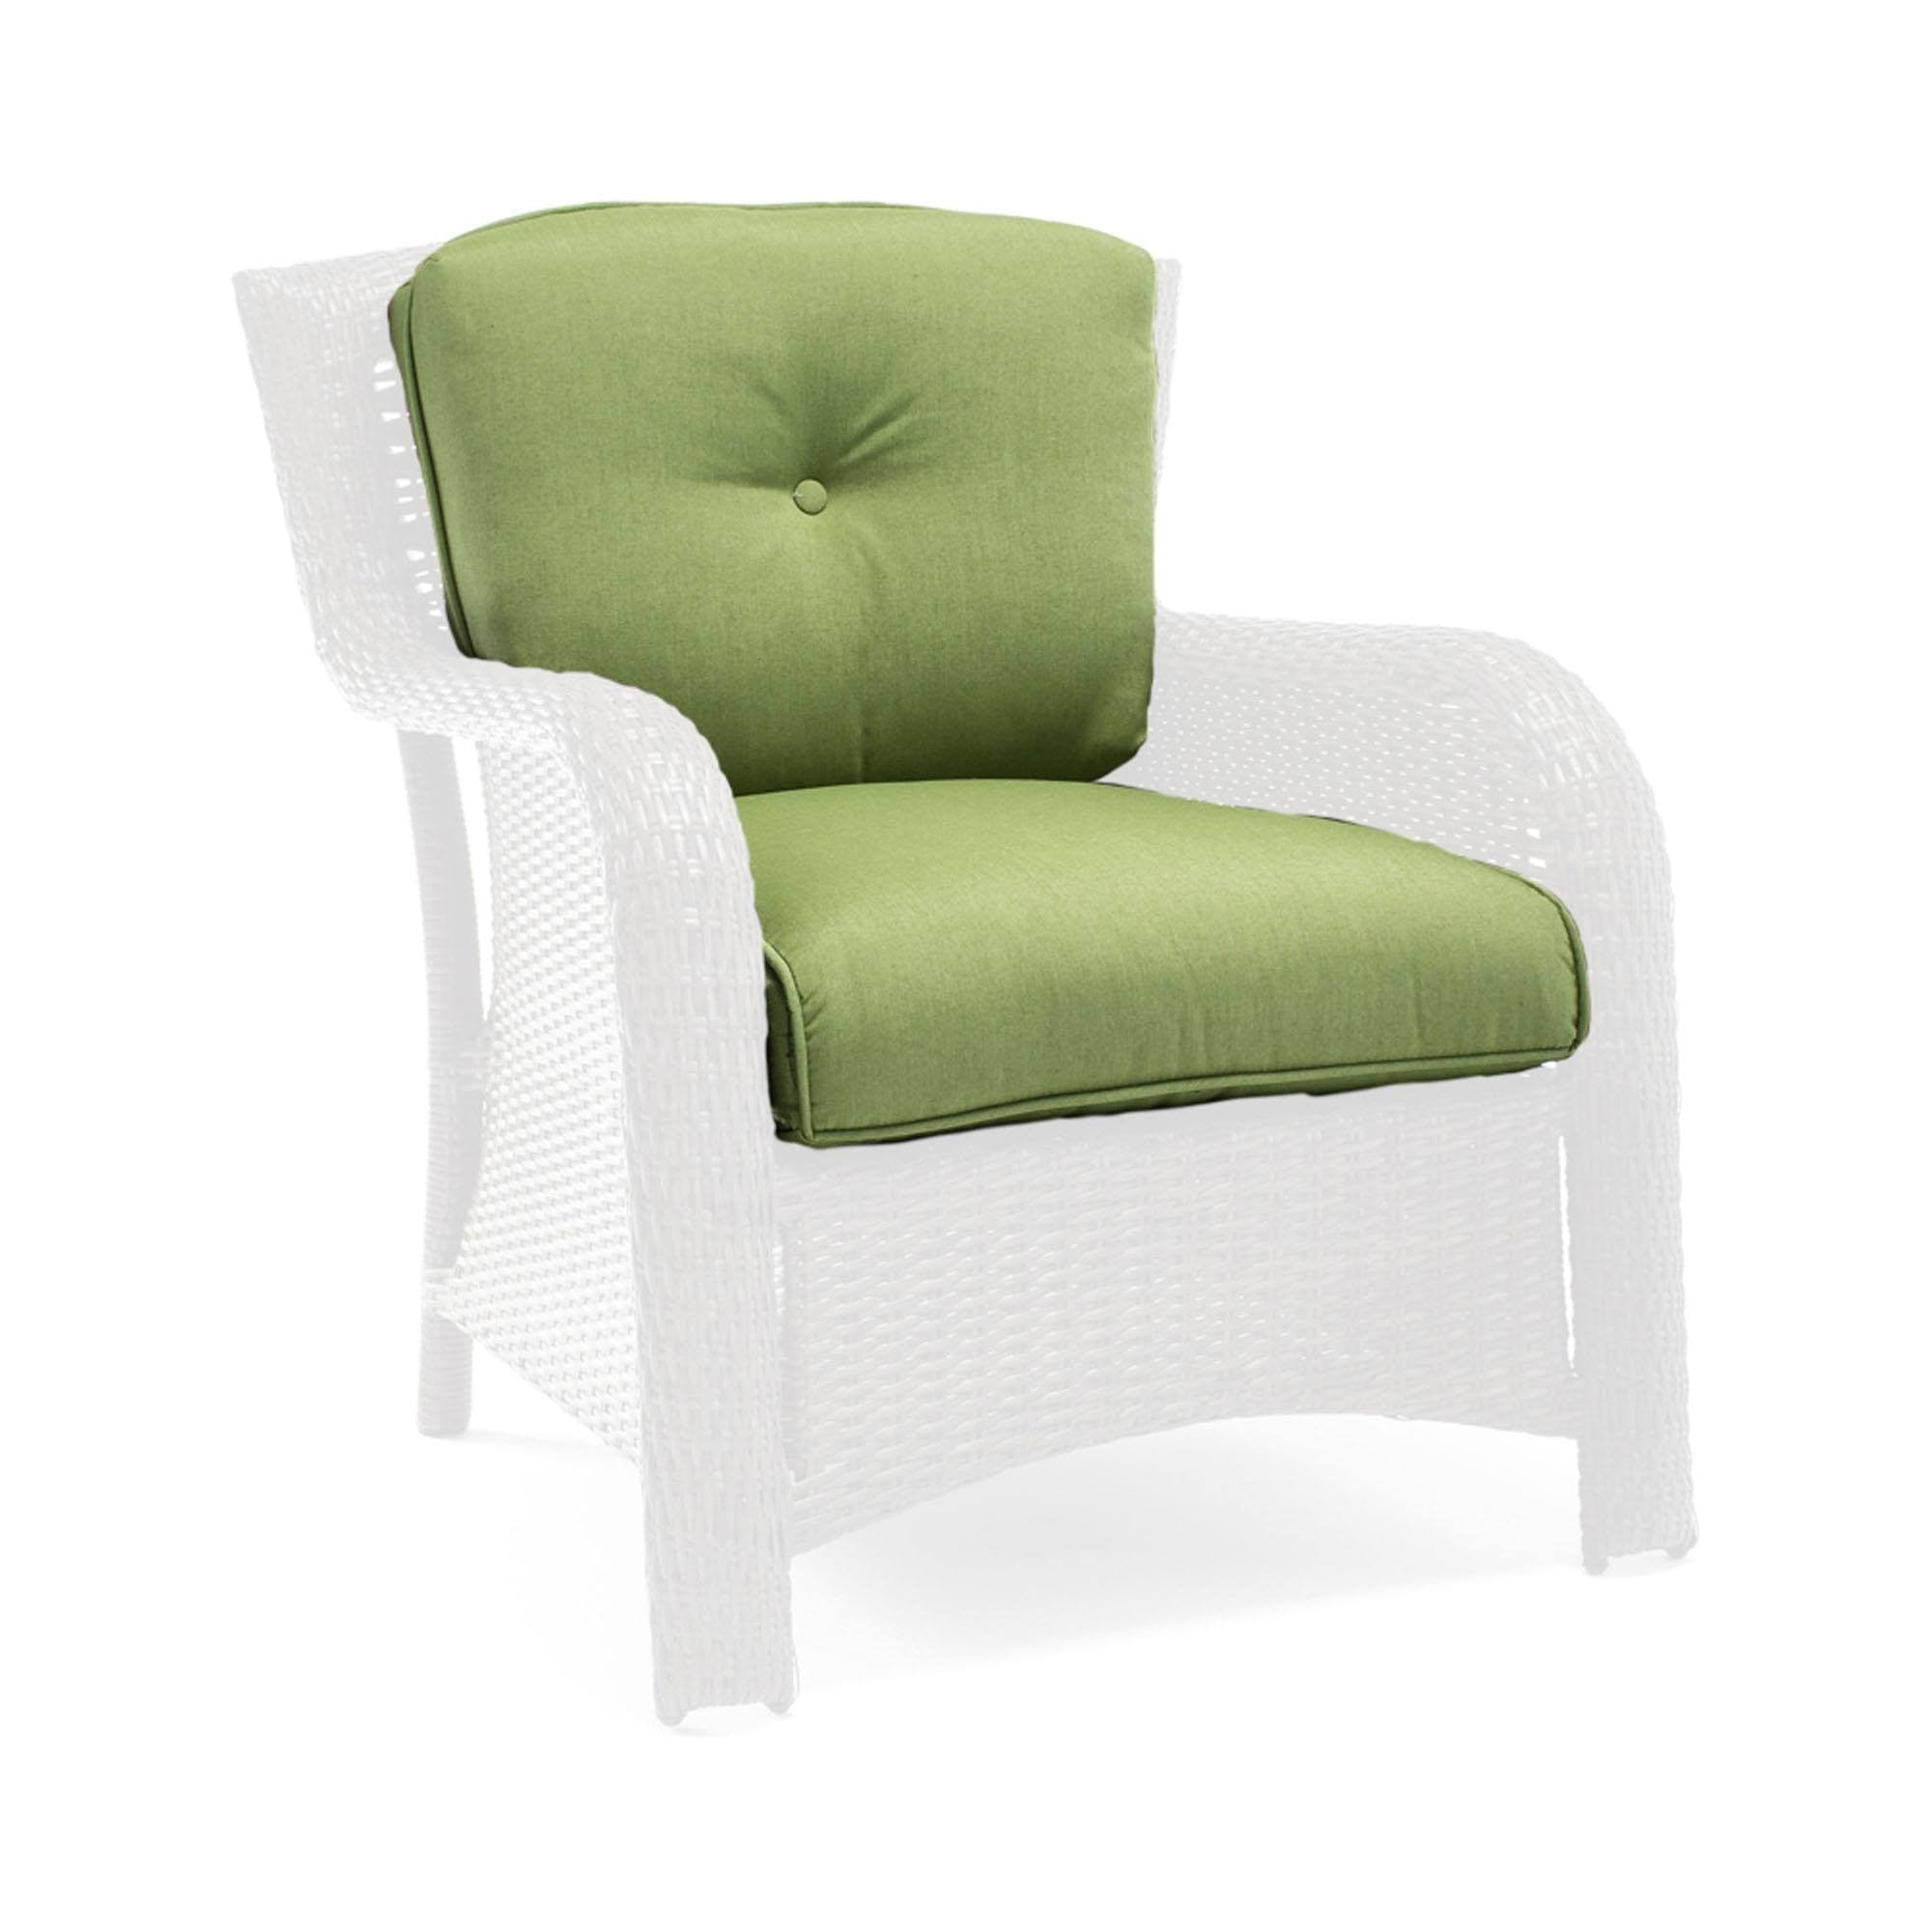 Sawyer Patio Lounge Chair Replacement Cushion La Z Boy Outdoor